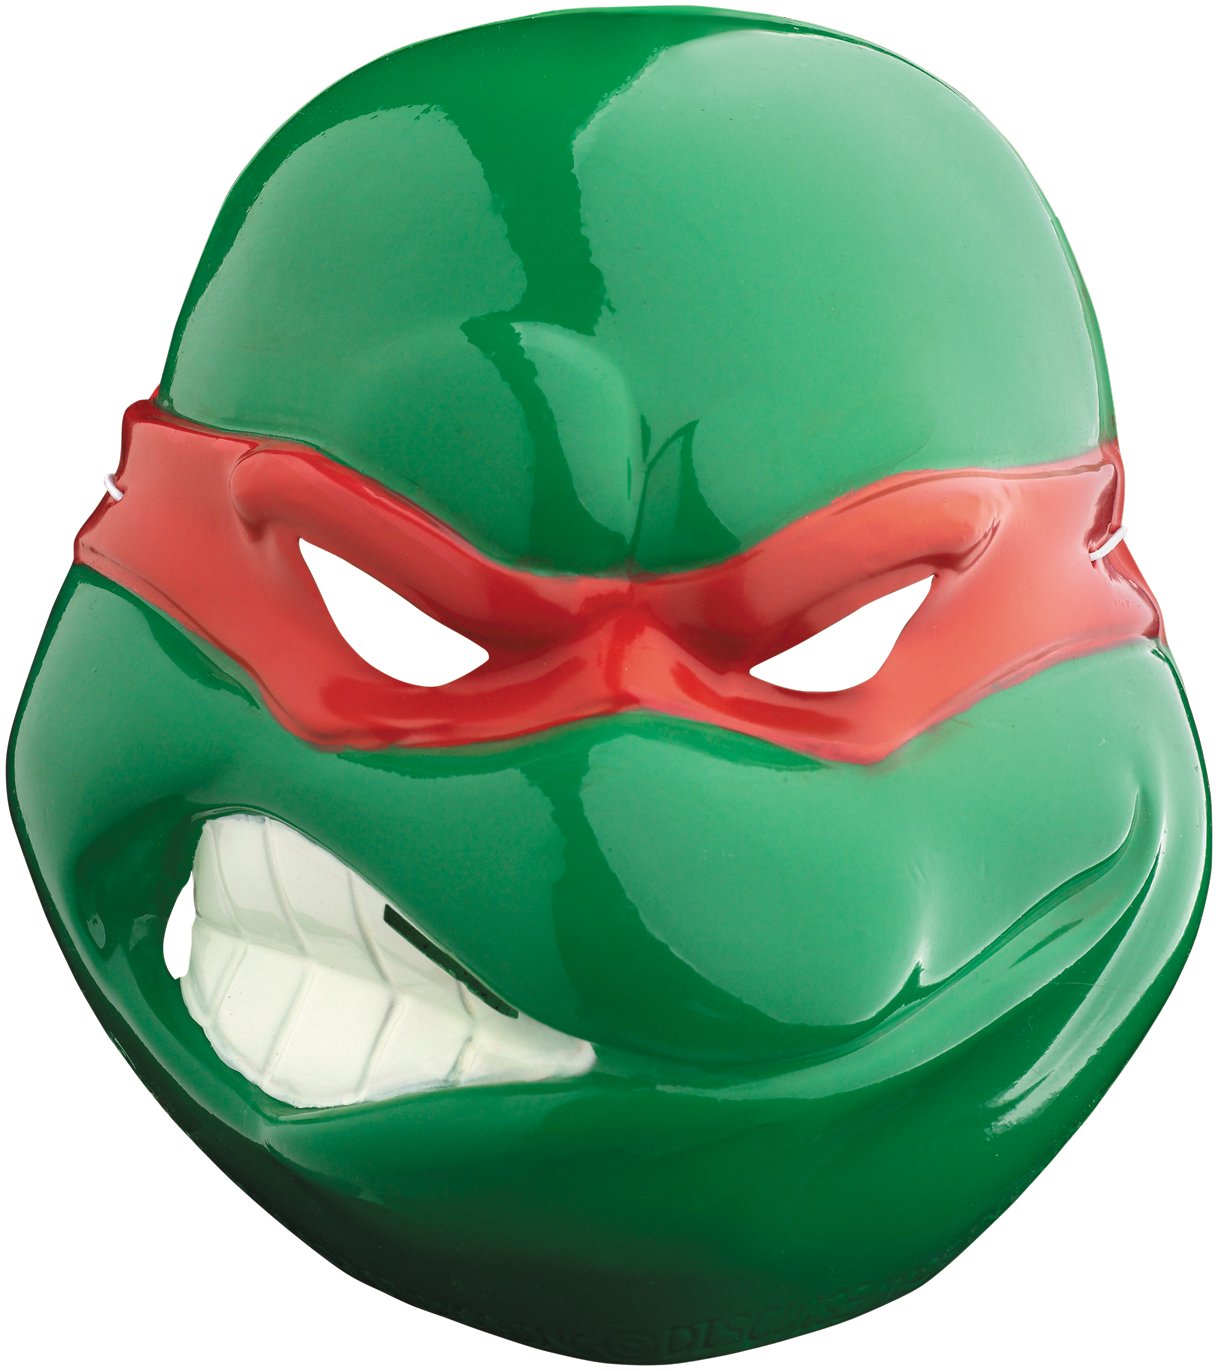 TMNT - Raphael Vacuform Mask (Adult) - Click Image to Close